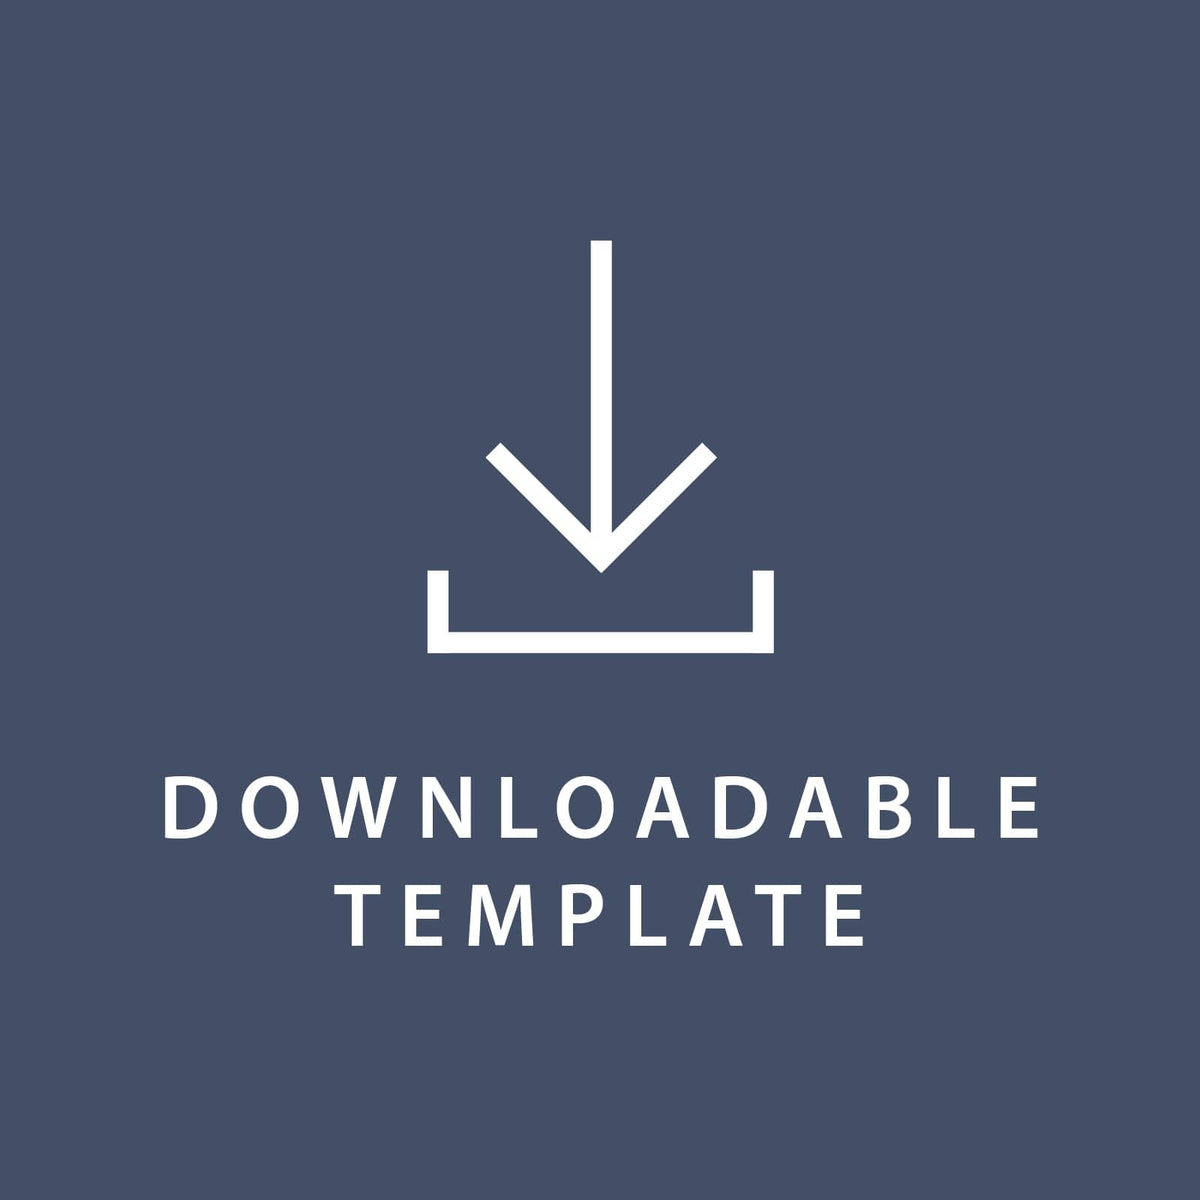 Template for 4.25 x 5.5 Note Cards Gartner Studios Template tmplt0088